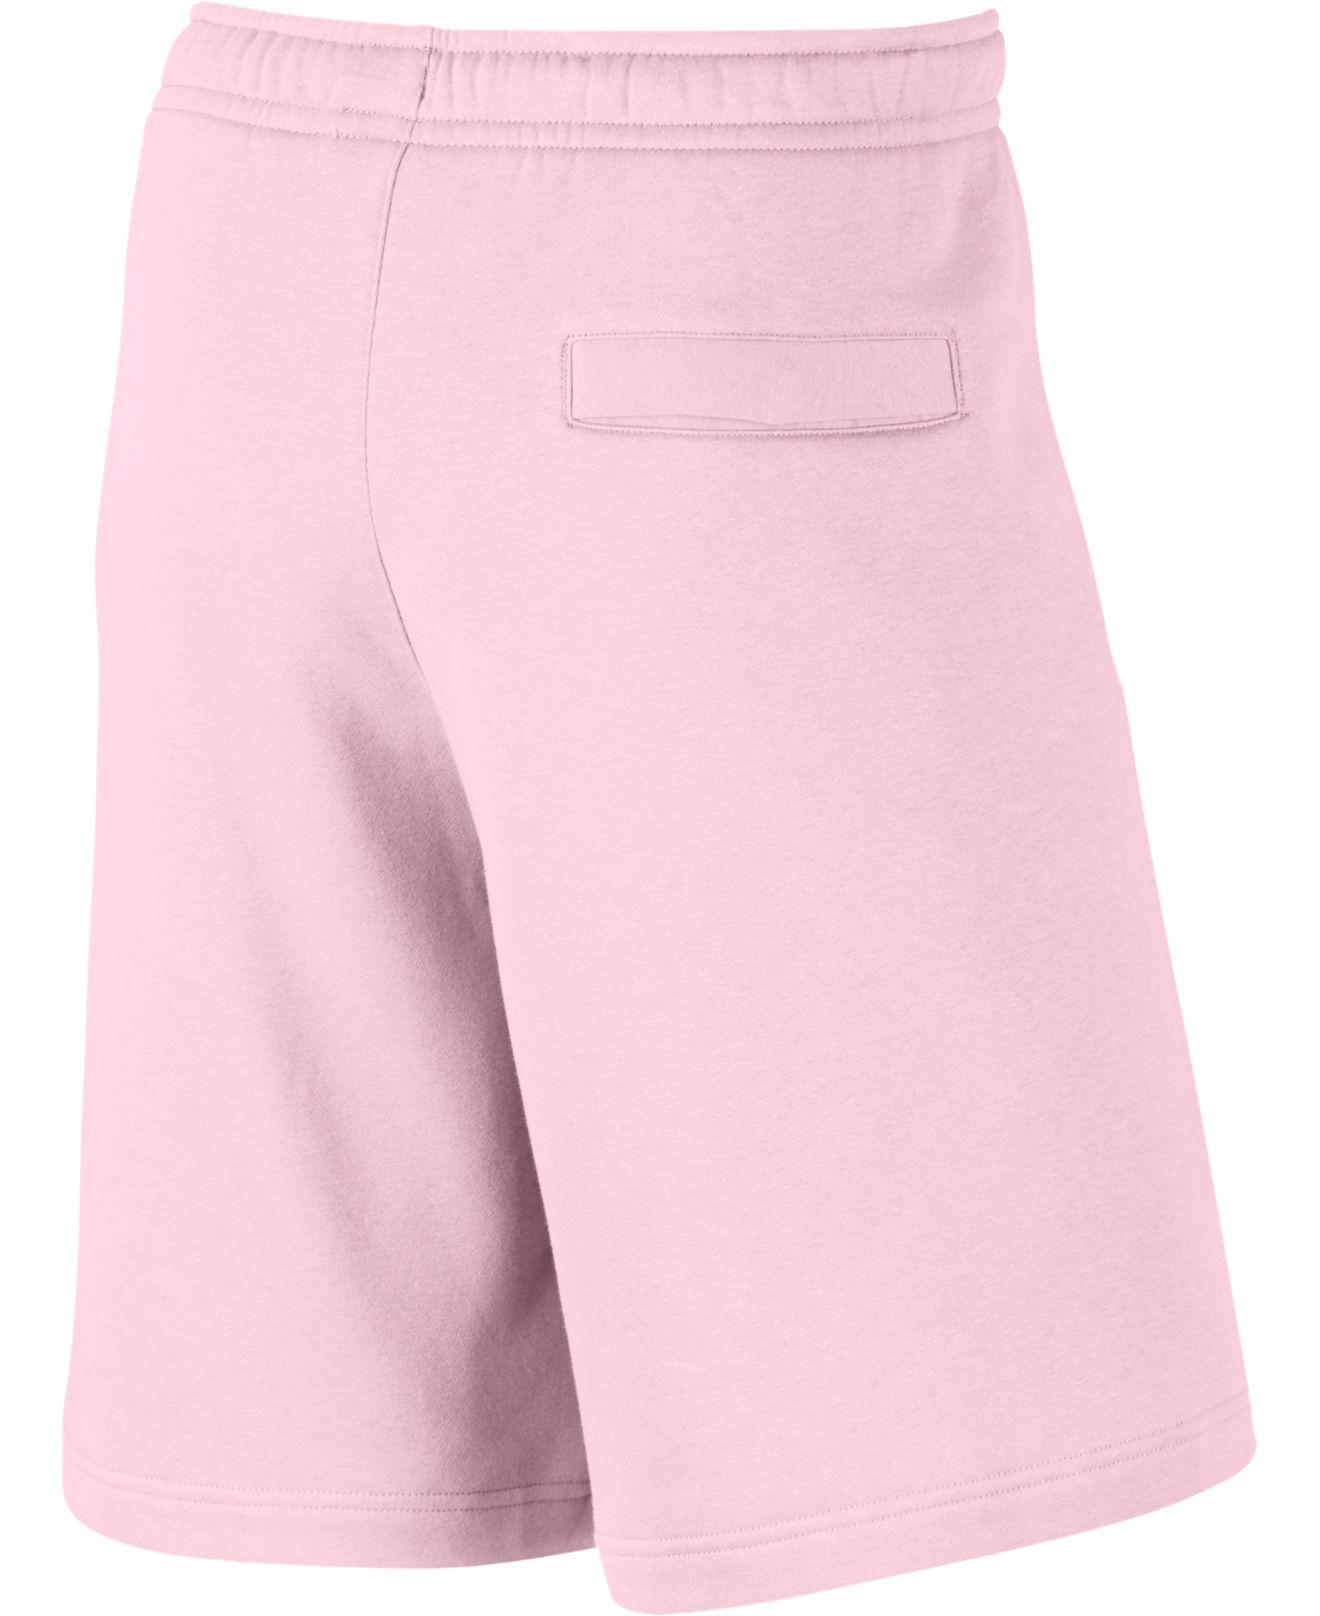 light pink nike shorts